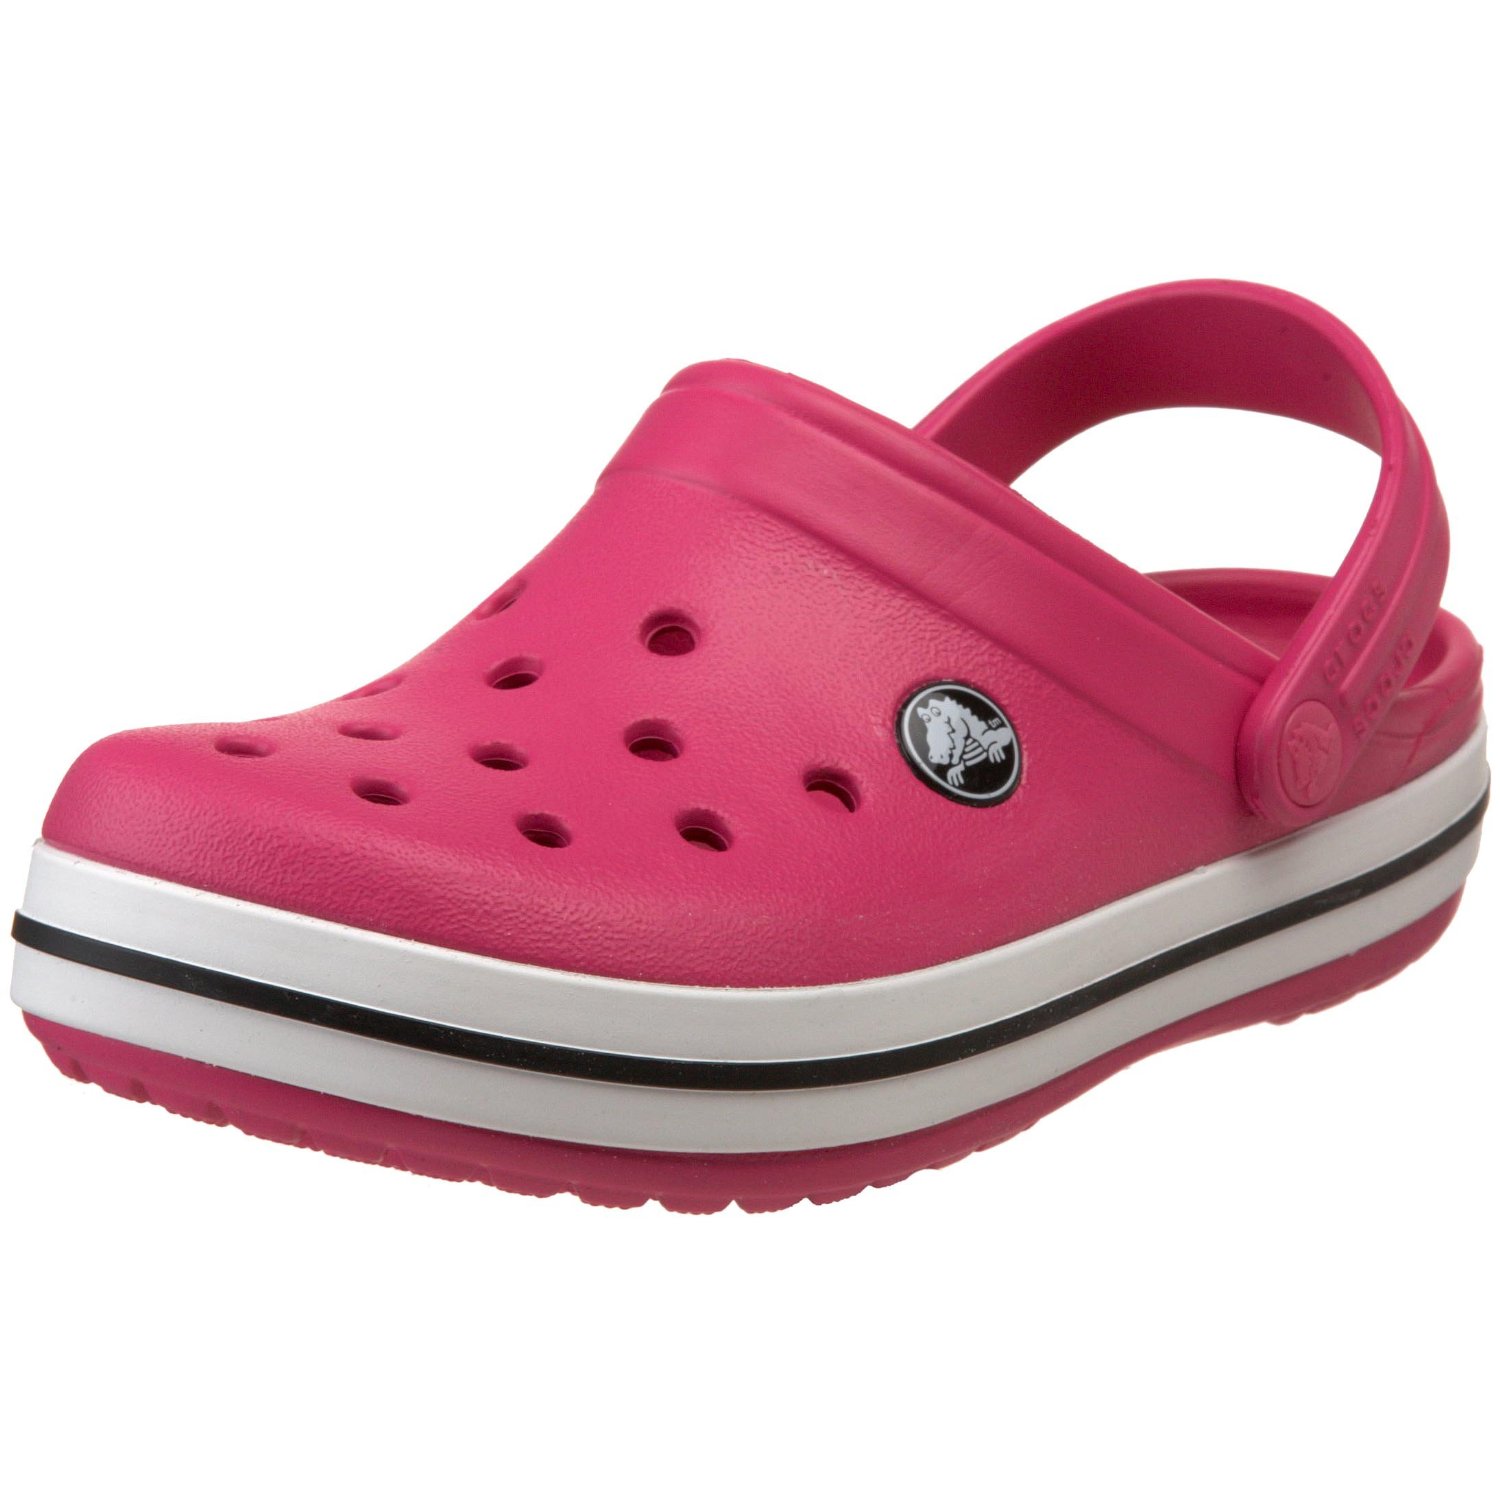 Crocs Shoes: Crocs Crocband Clog (Toddler/Little Kid)